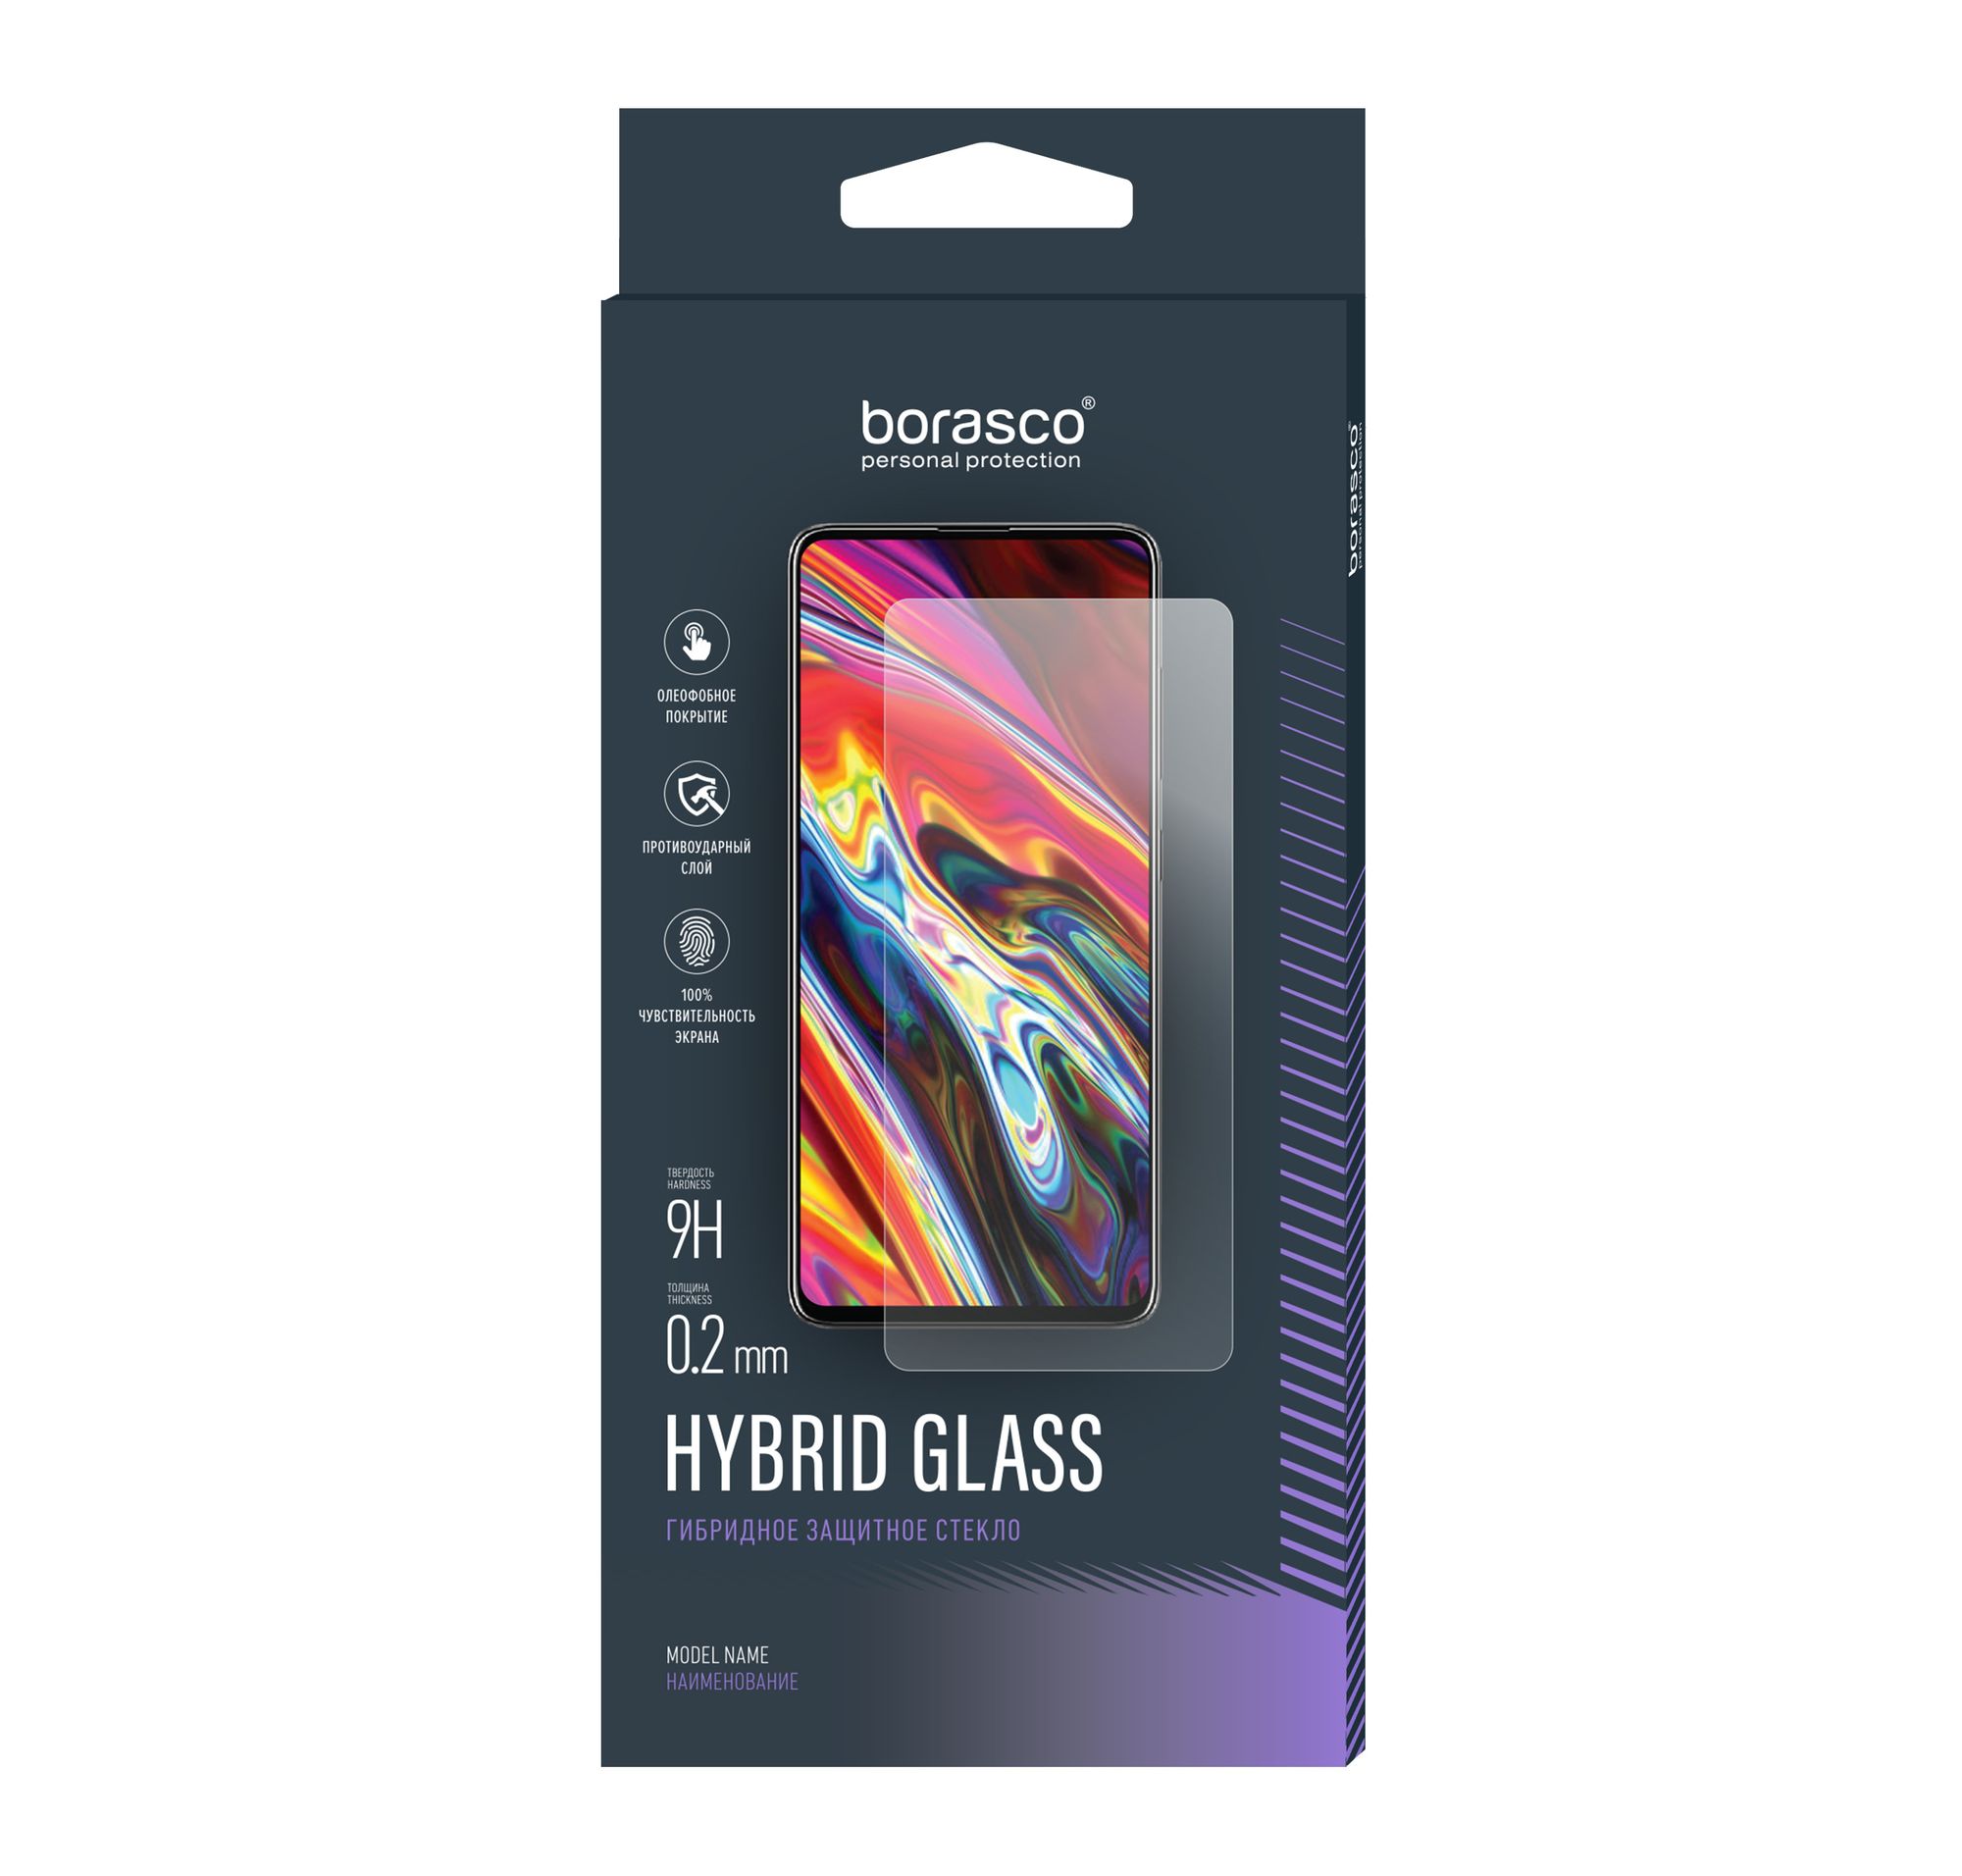 Стекло защитное Hybrid Glass VSP 0,26 мм для Huawei P20 защитное стекло на huawei p20 lite nova 3e